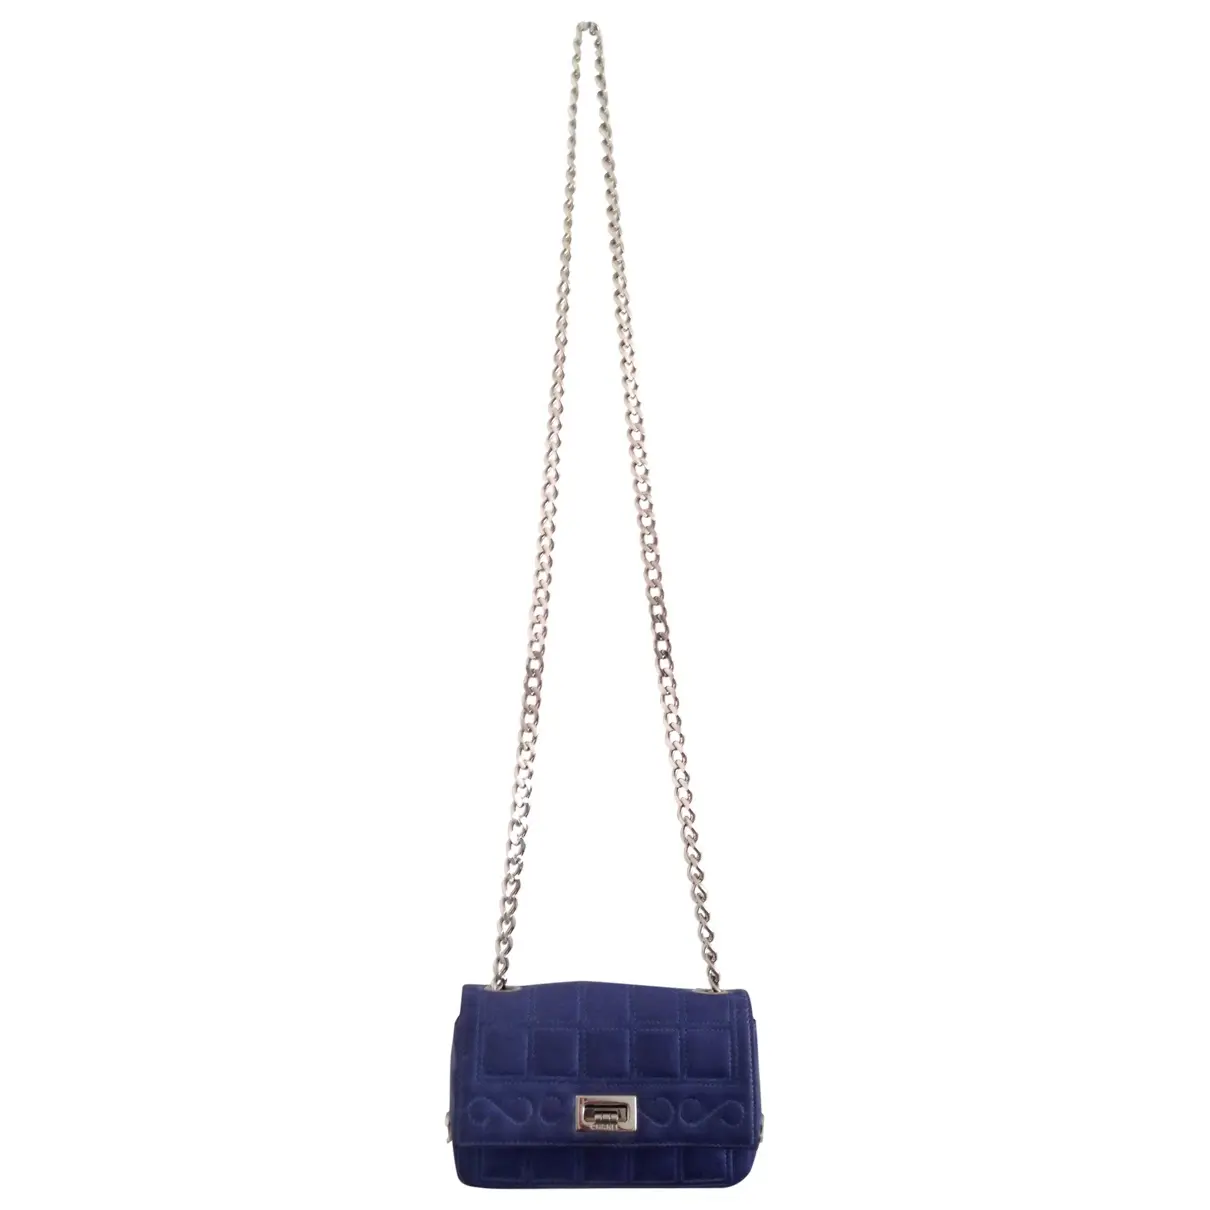 Blue Leather Handbag Chanel